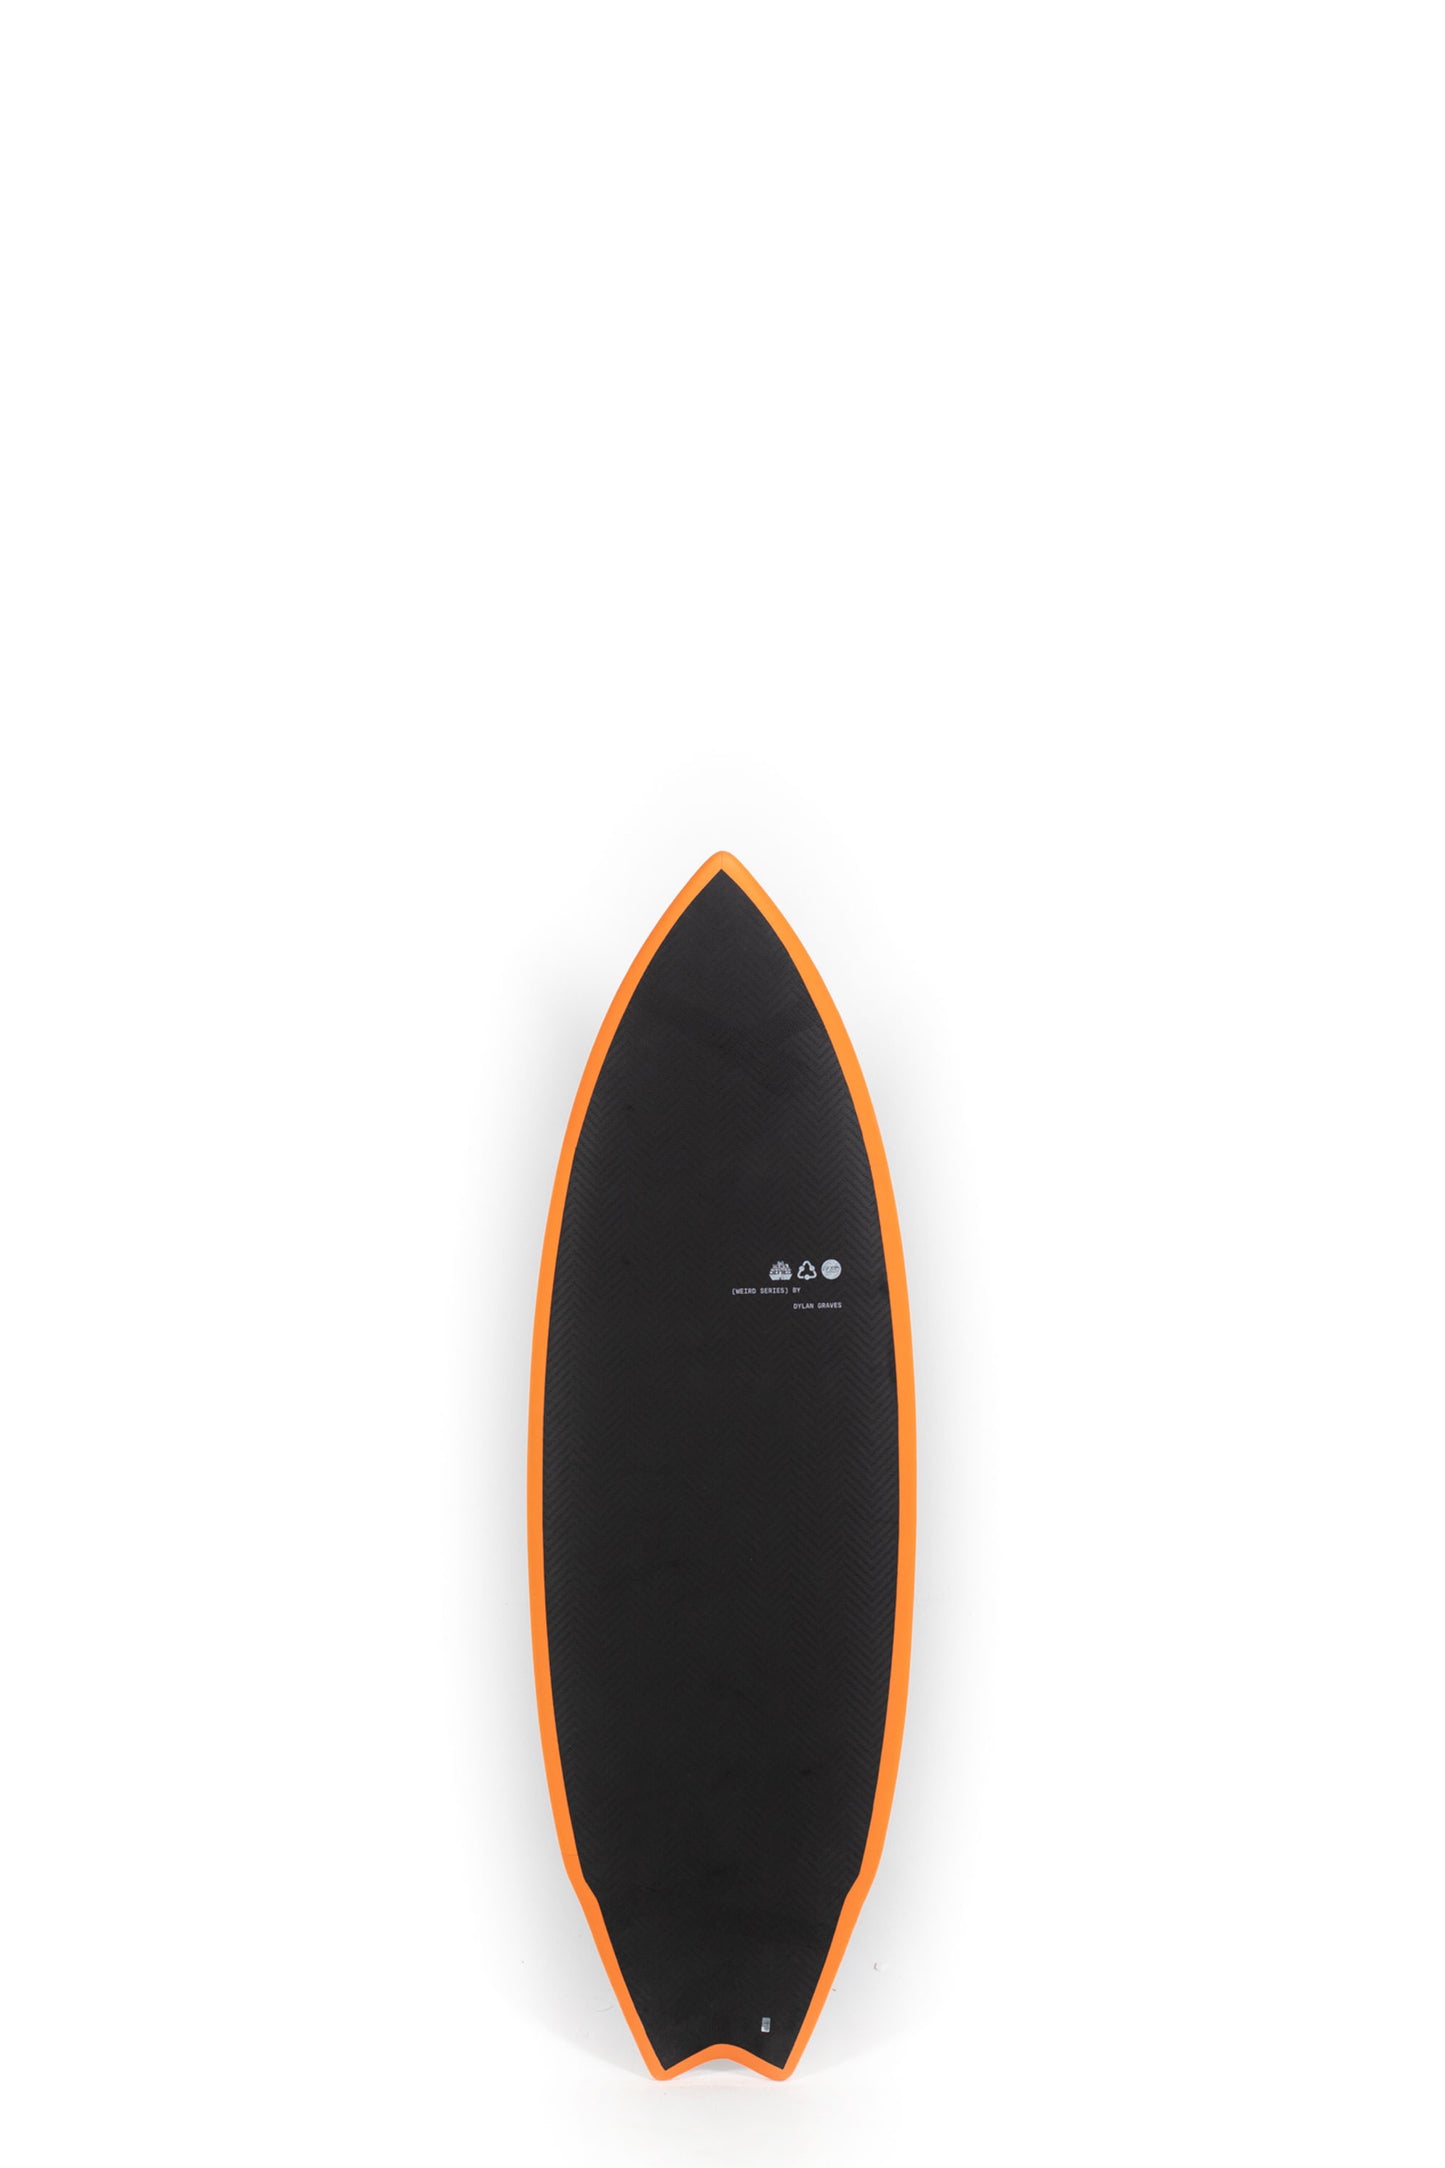 Pukas Surf Shop - HaydenShapes Surfboard - WEIRD WAVES SOFT - 5'4" x 20" x 2 1/2" x 29L - ESOFTWSDG-FU